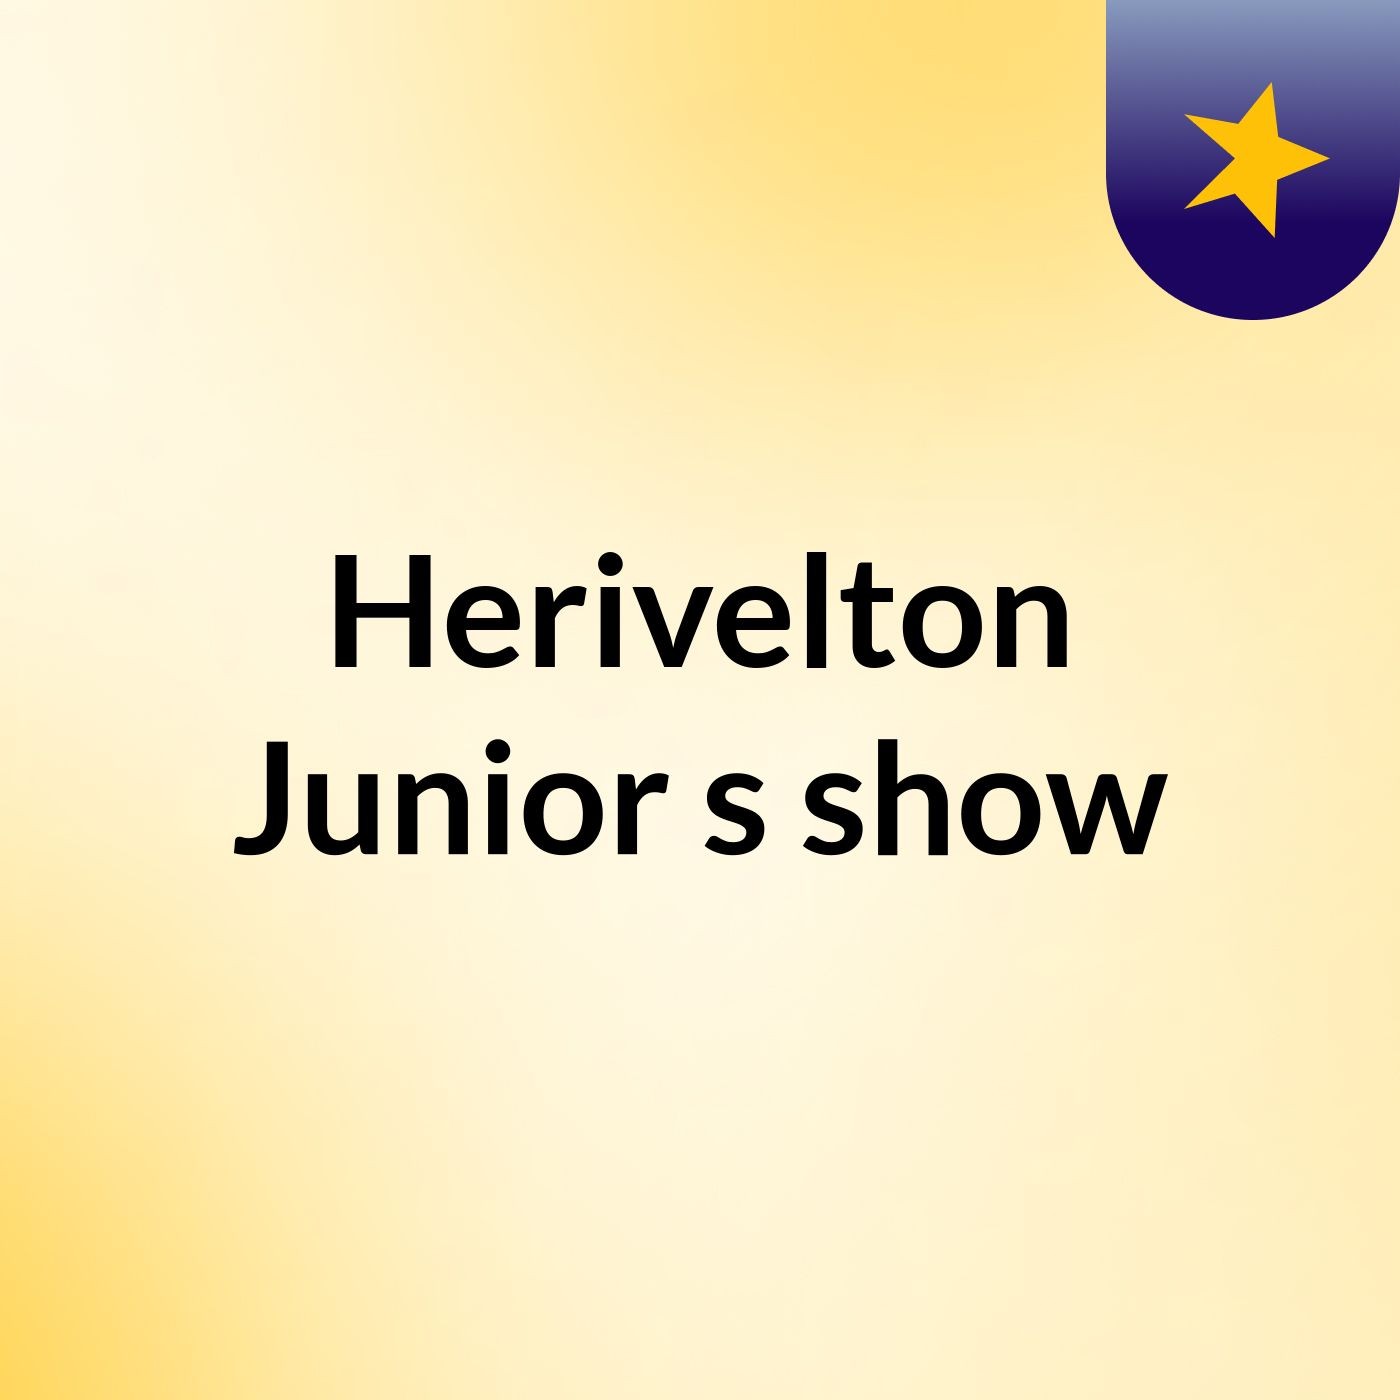 Herivelton Junior's show